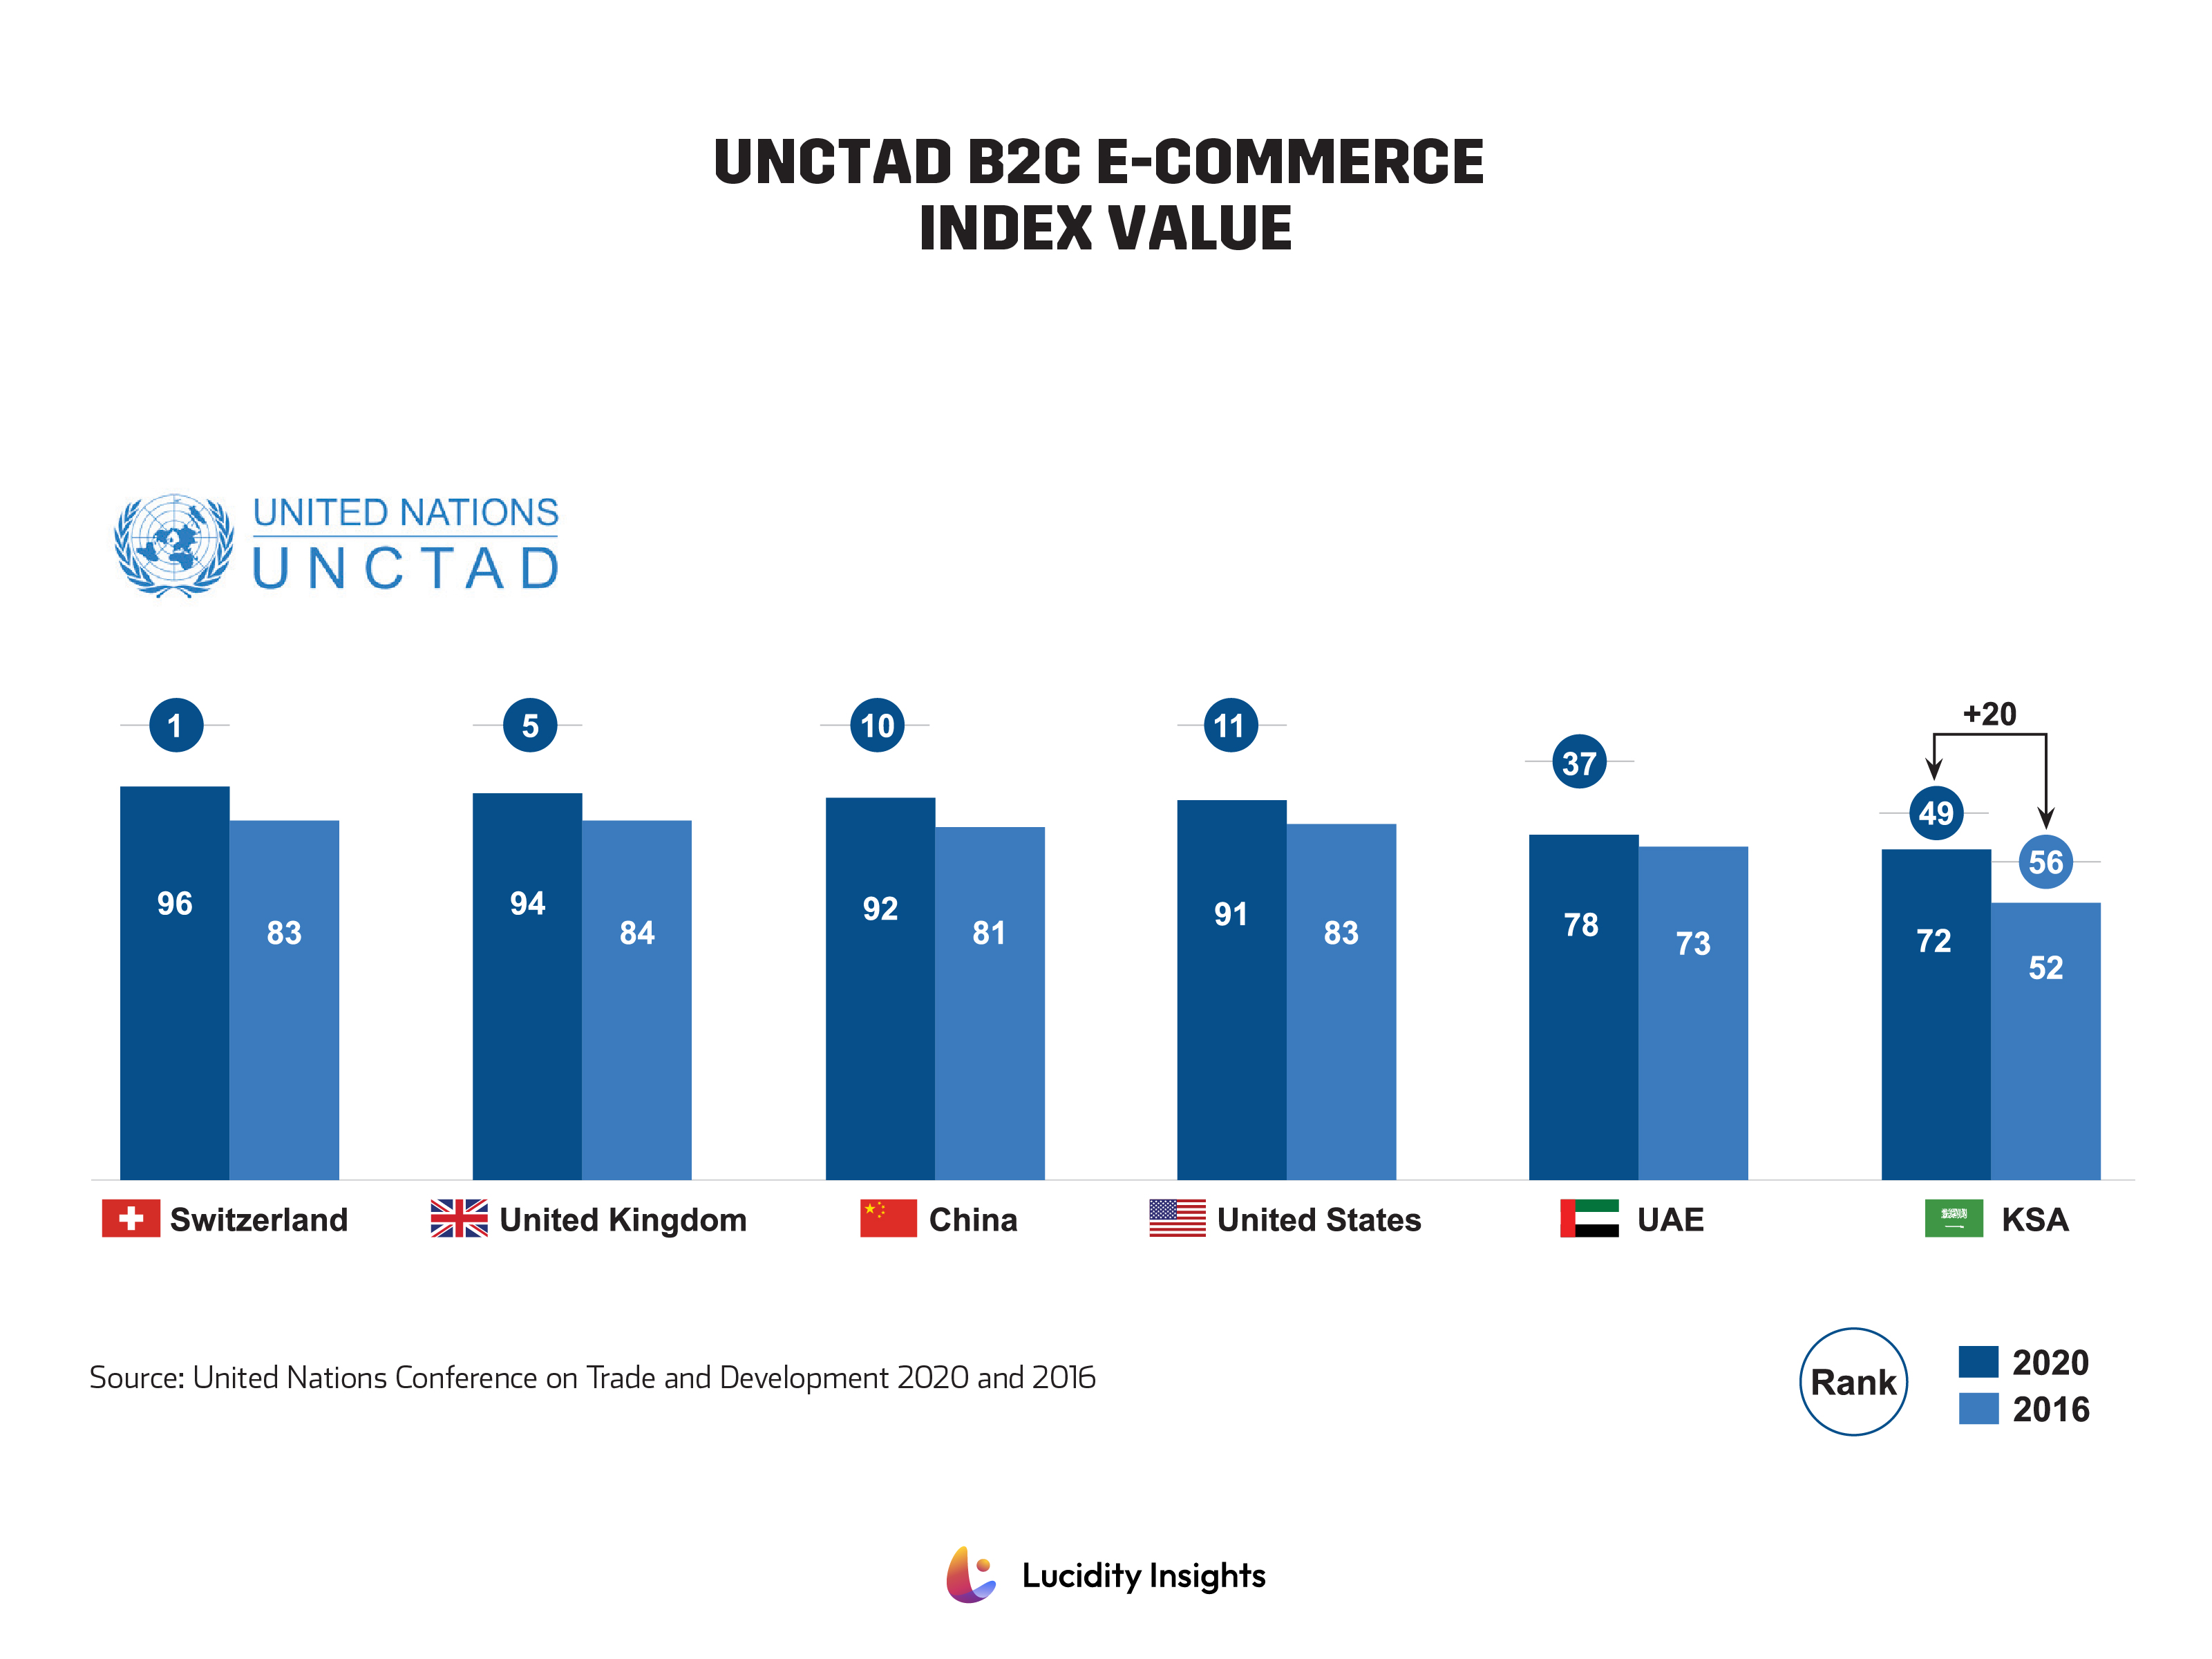 KSA B2C E-Commerce Index Value (Saudi Arabia) by UNCTAD Data